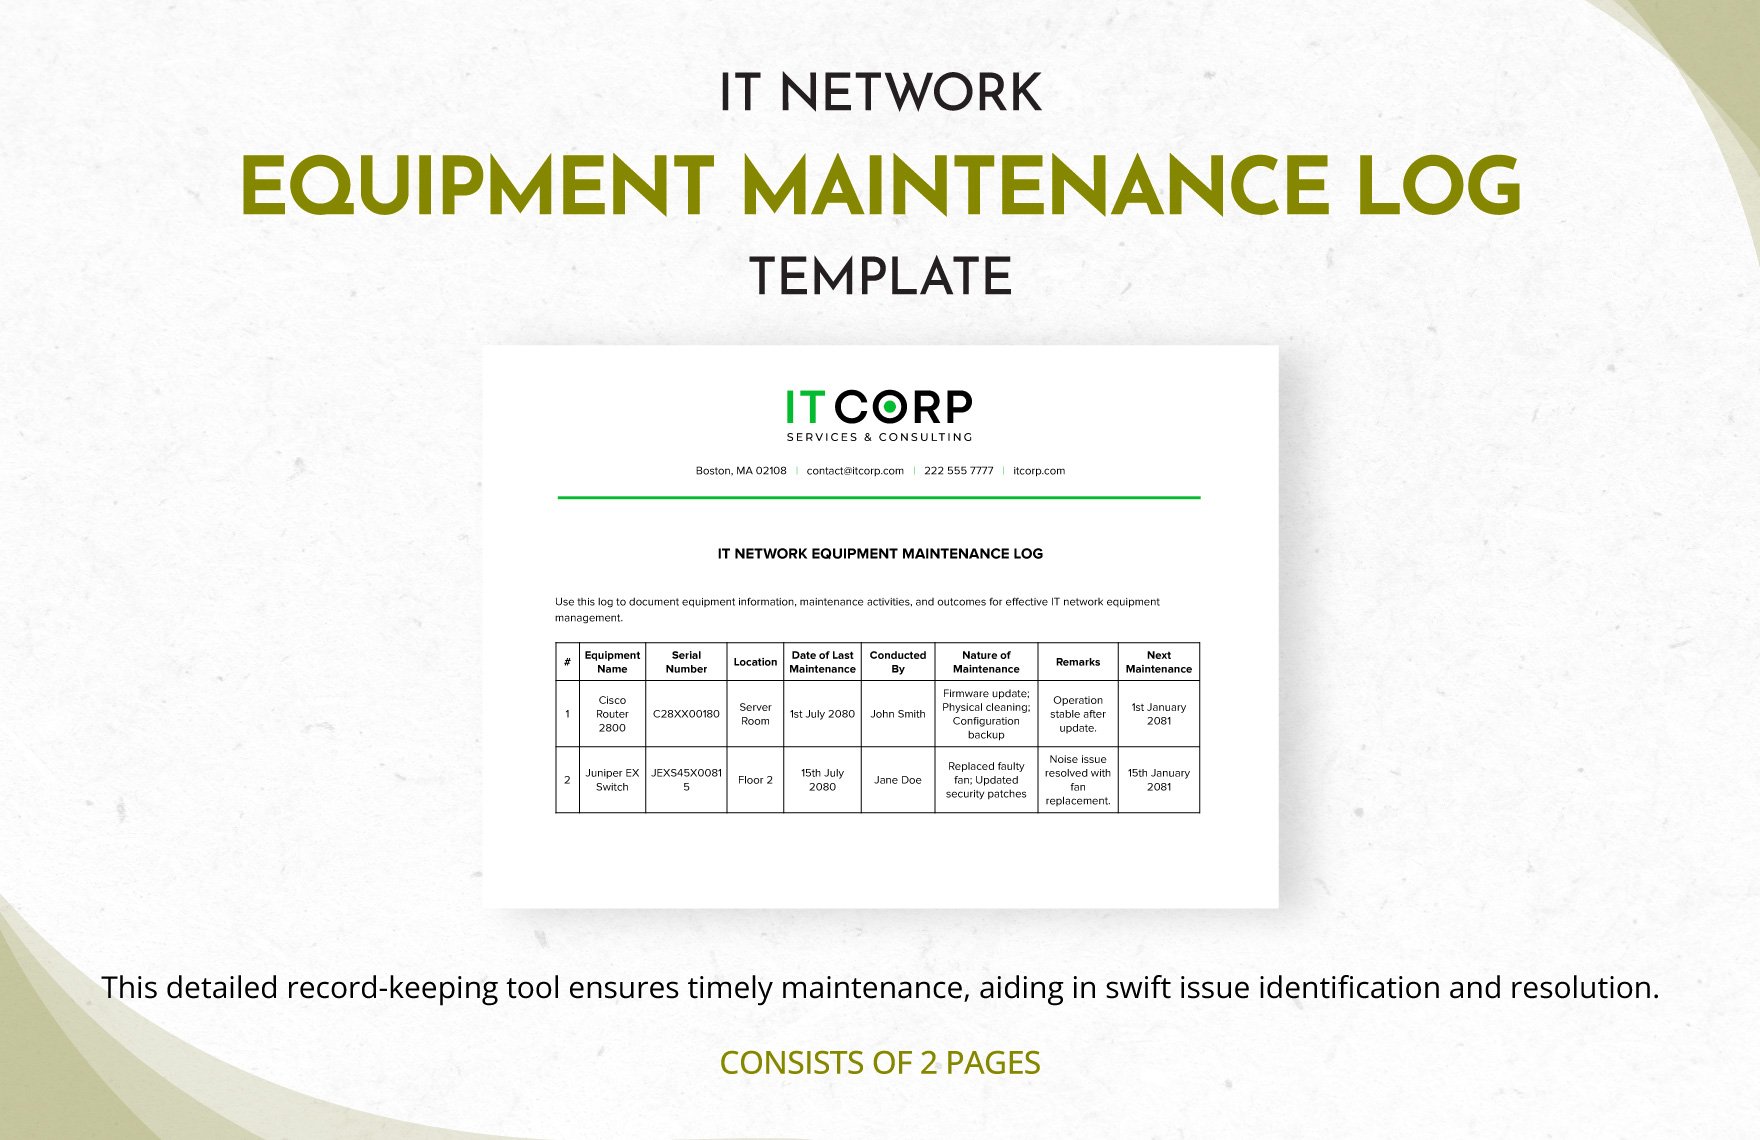 IT Network Equipment Maintenance Log Template